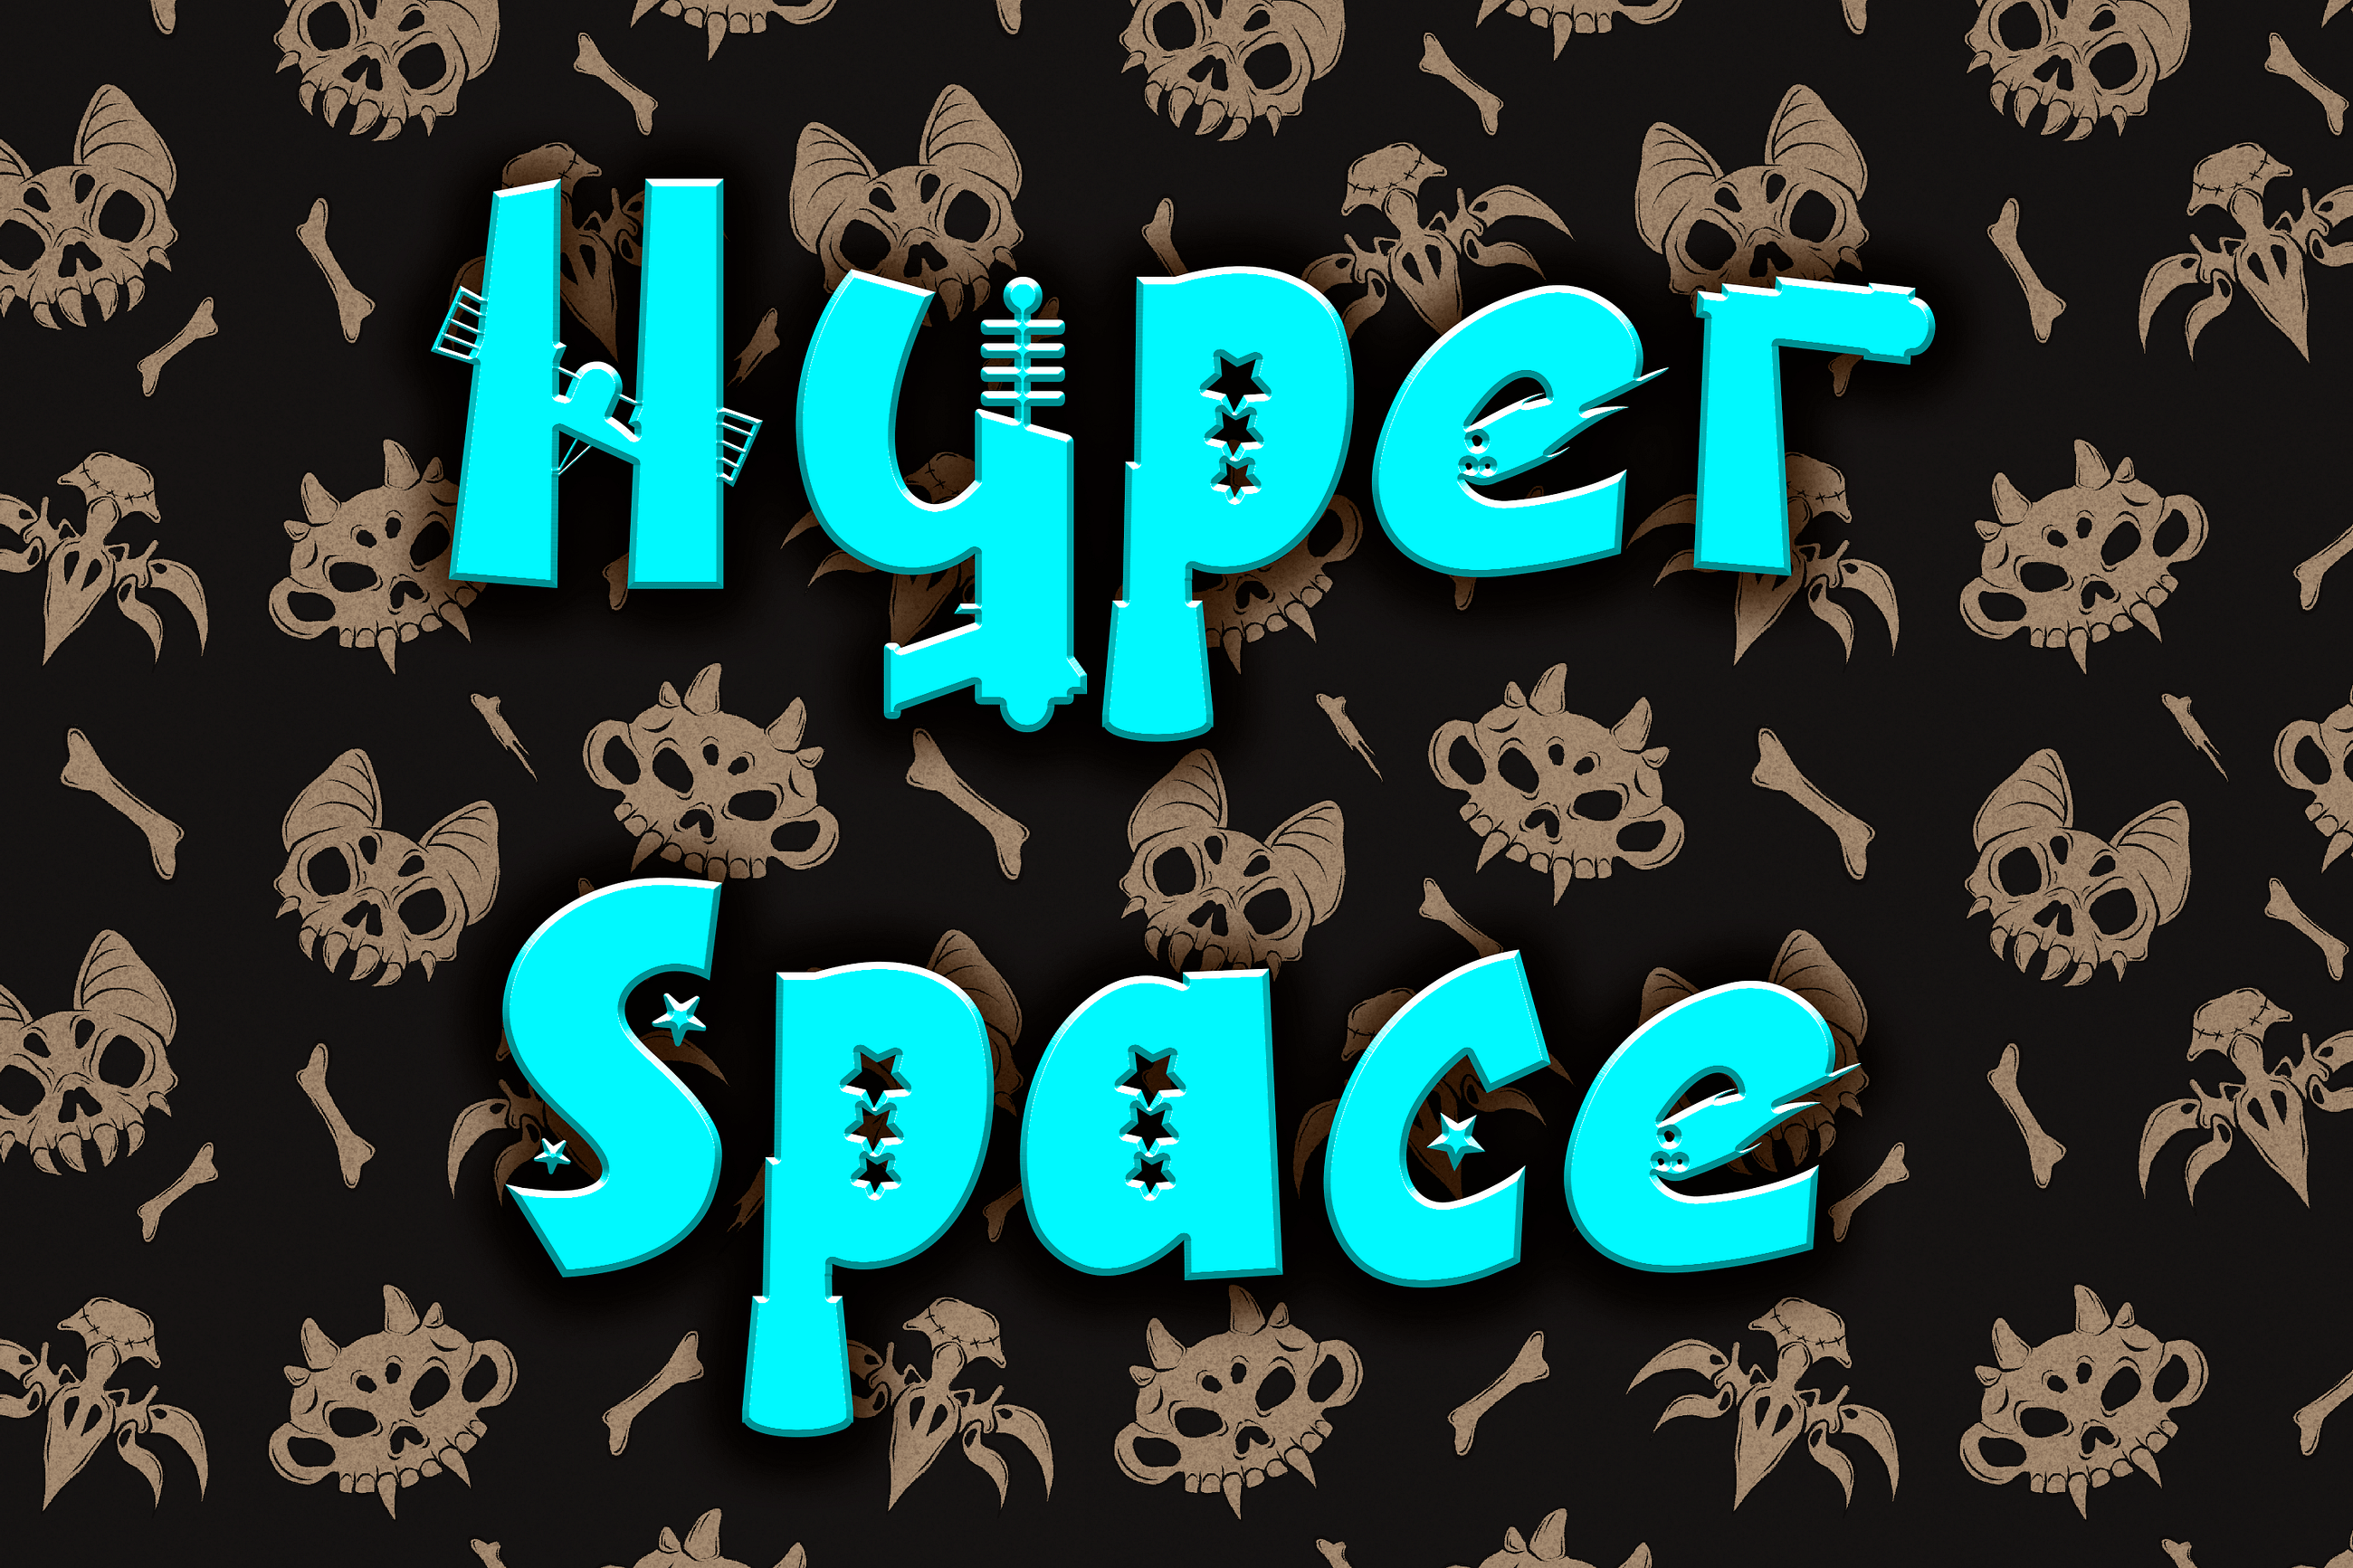 Hyper Space Font